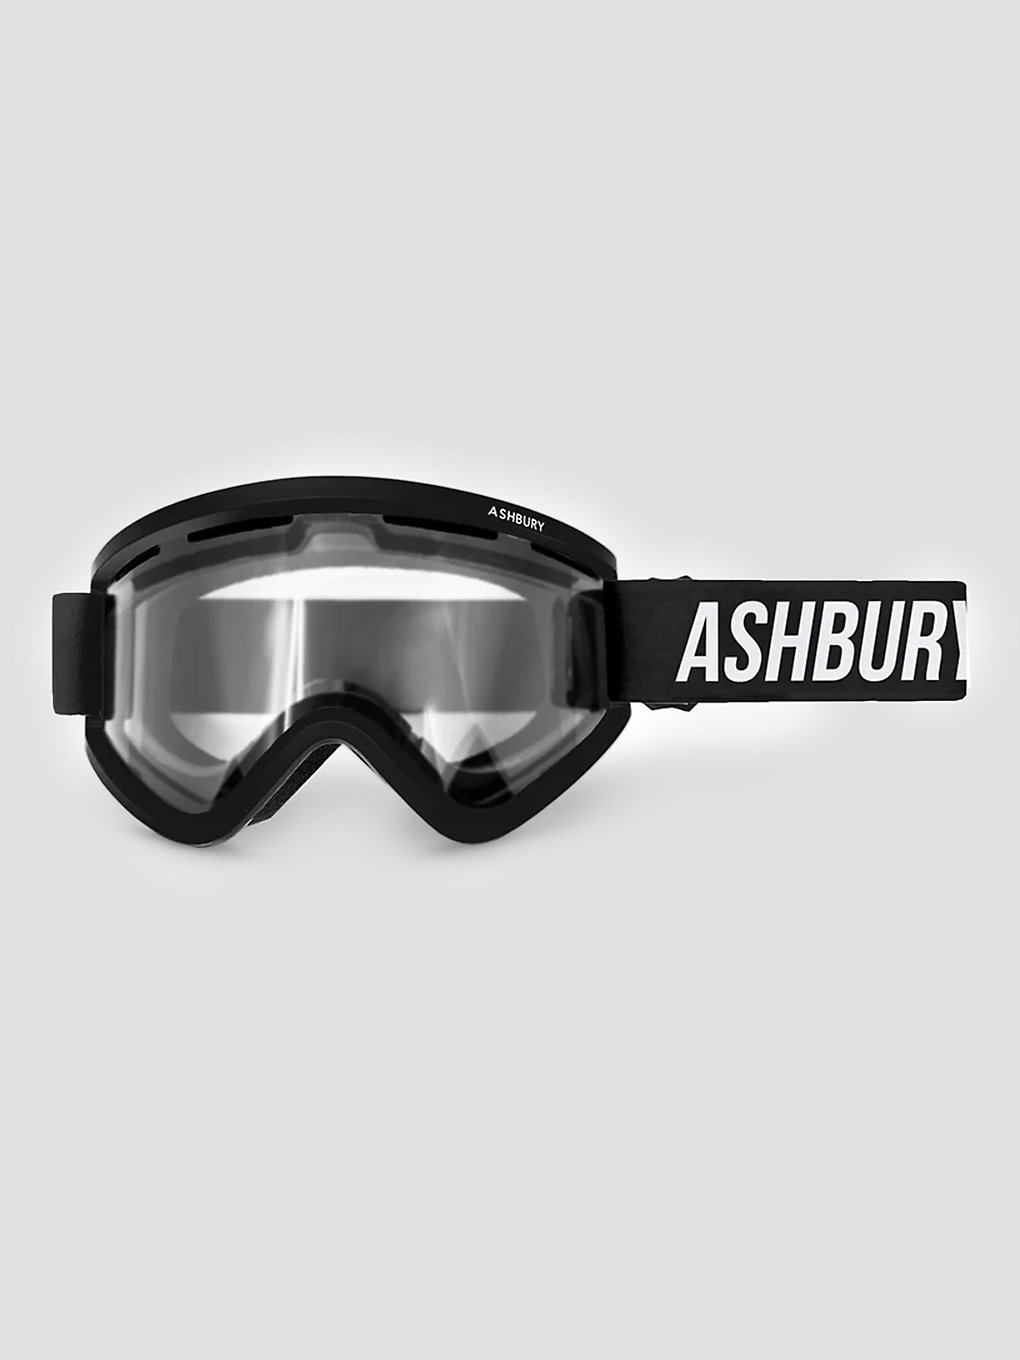 Ashbury Nightvision Nightvision Goggle clear kaufen